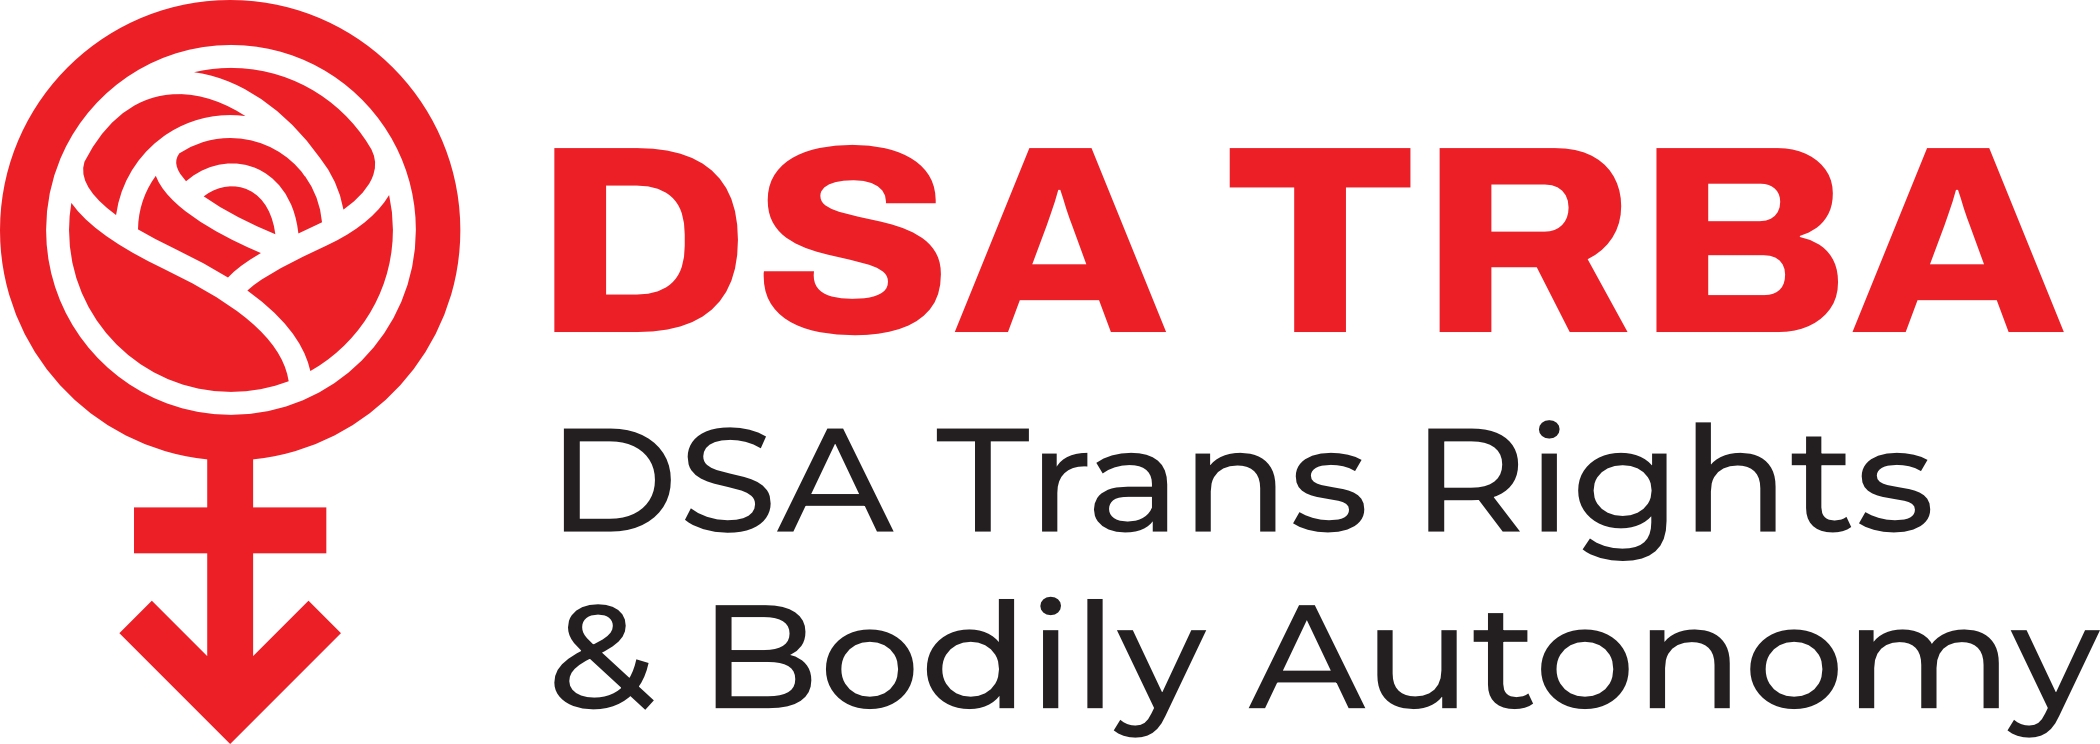 DSA Trans Rights & Bodily Autonomy